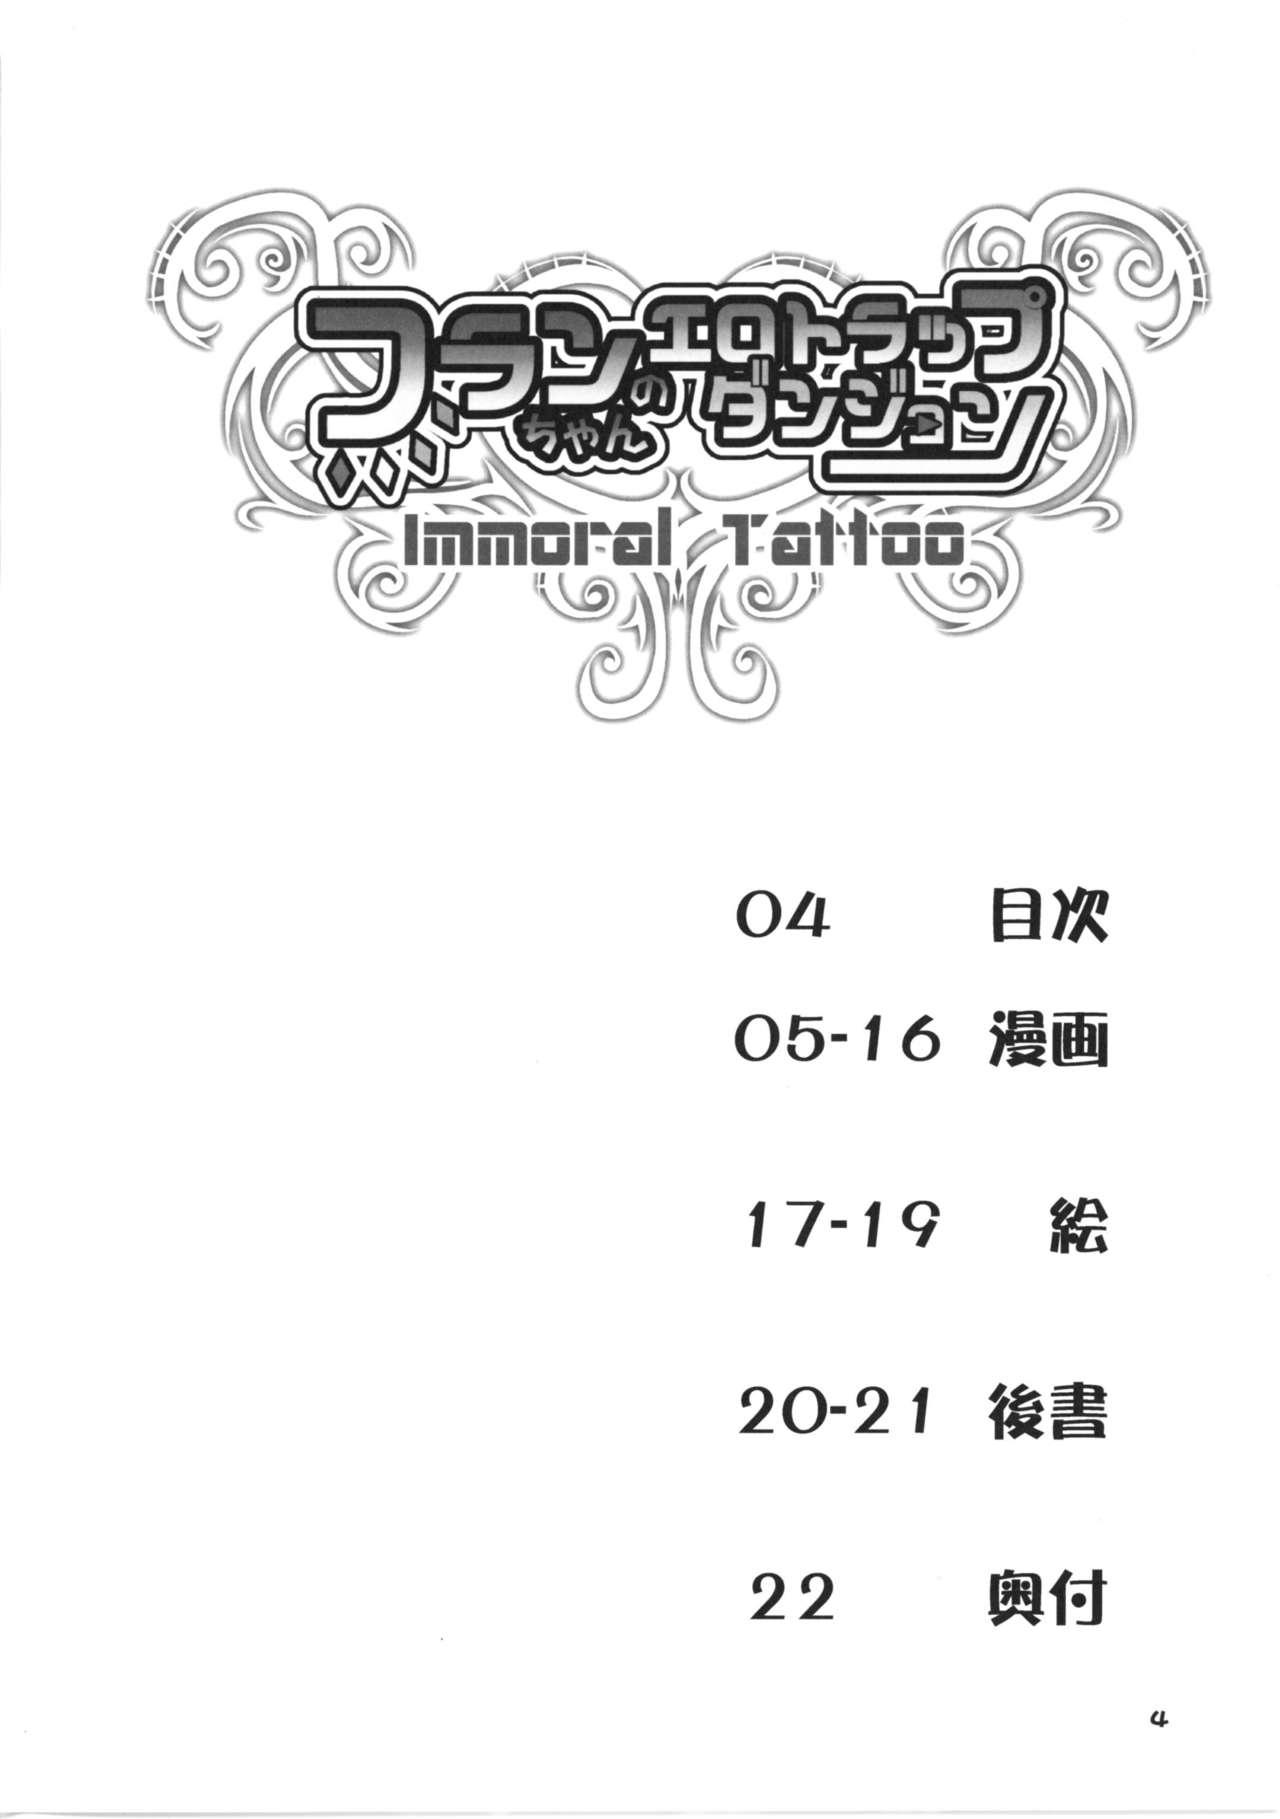 Flan-chan no Ero Trap Dungeon Immoral Tattoo 3